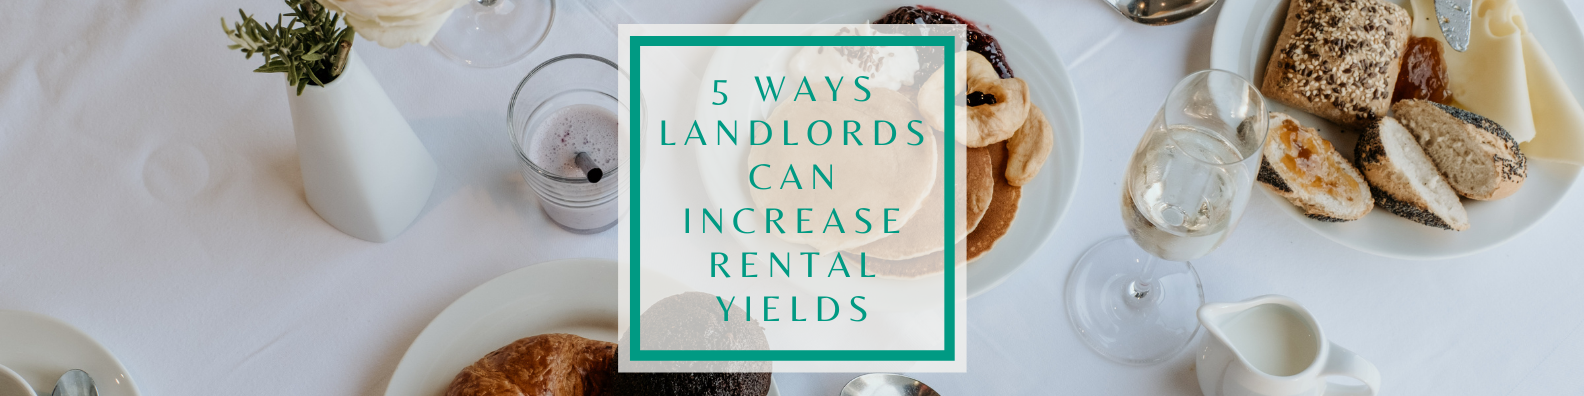 Landlords increasing rental yield